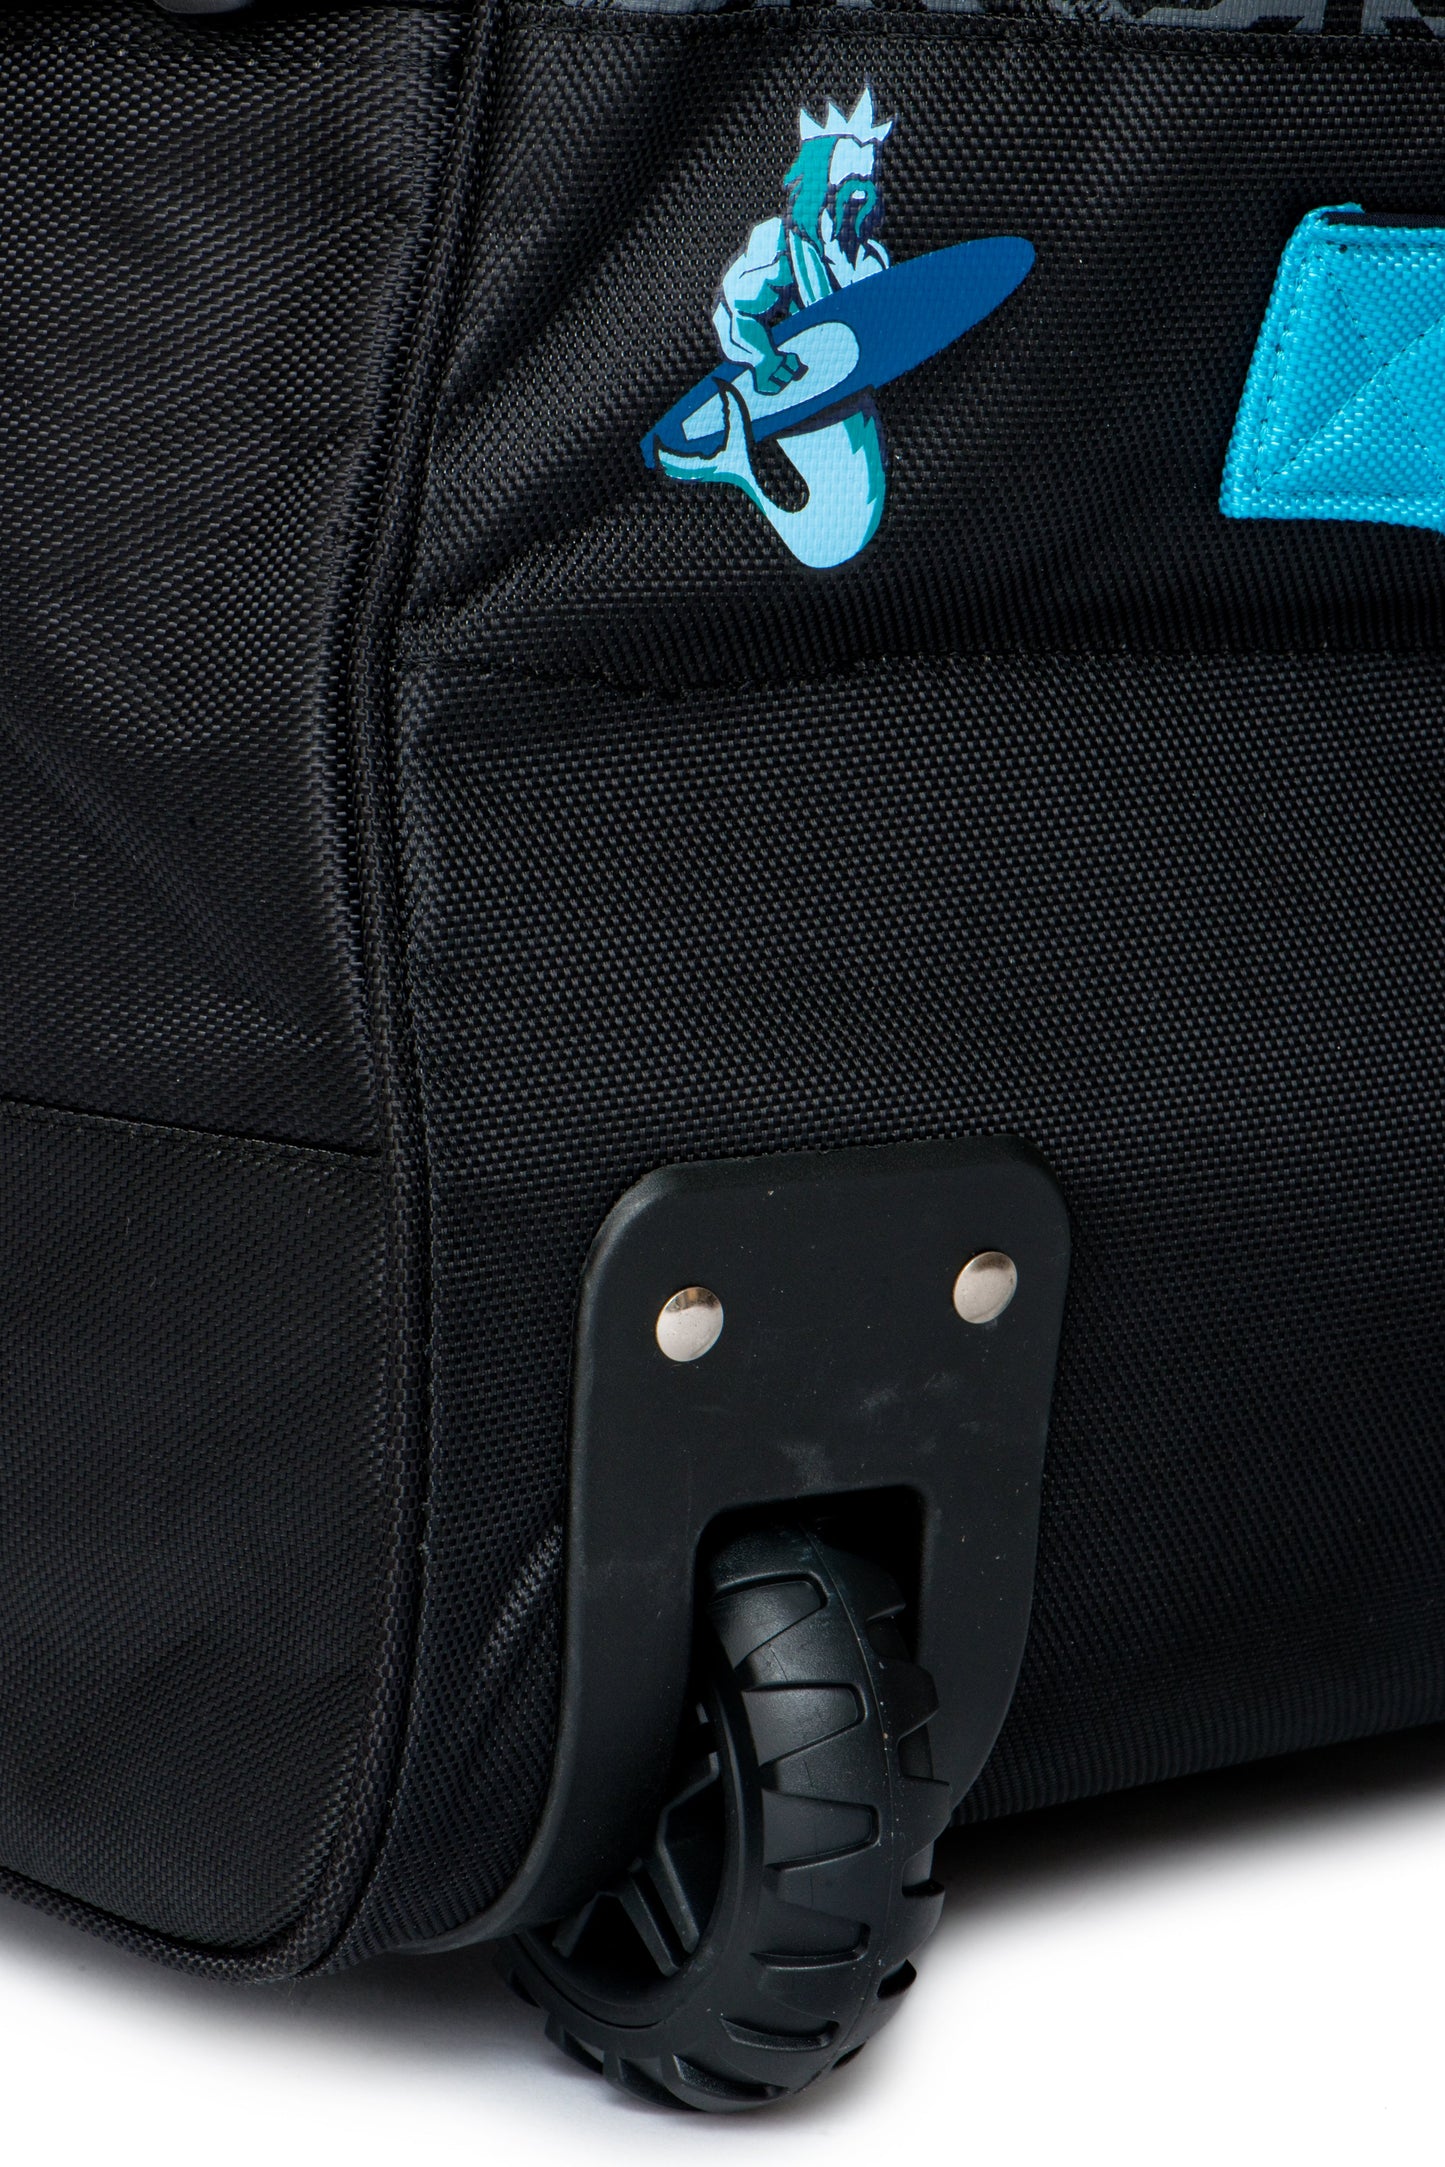 SUP Wheelie Backpack Bag- Small